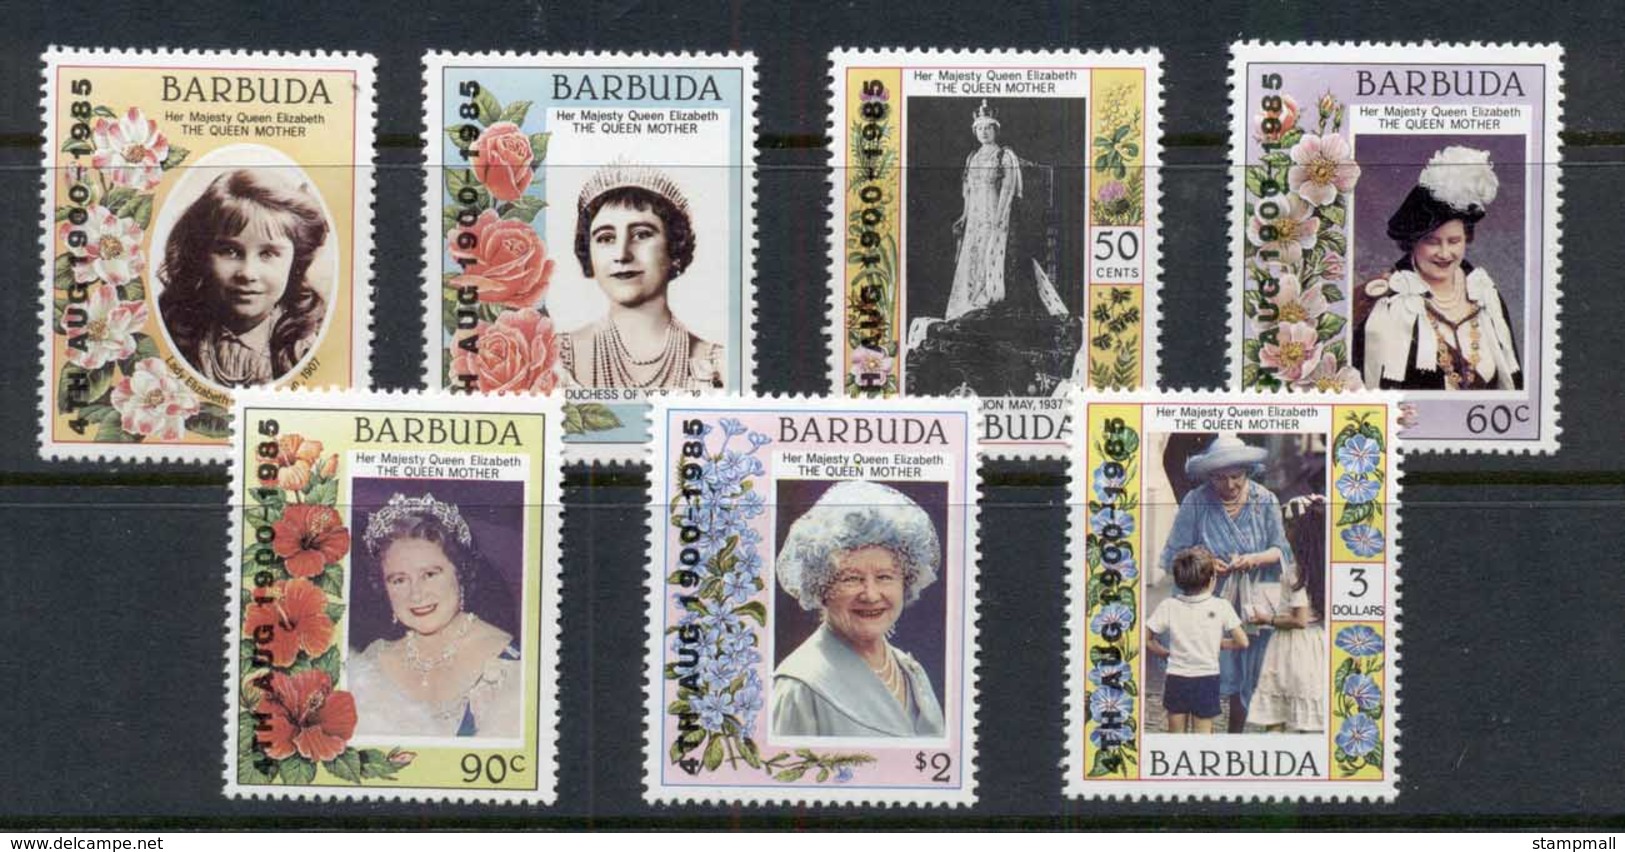 Barbuda 1985 Queen Mother 85th Birthday MUH - Antigua And Barbuda (1981-...)